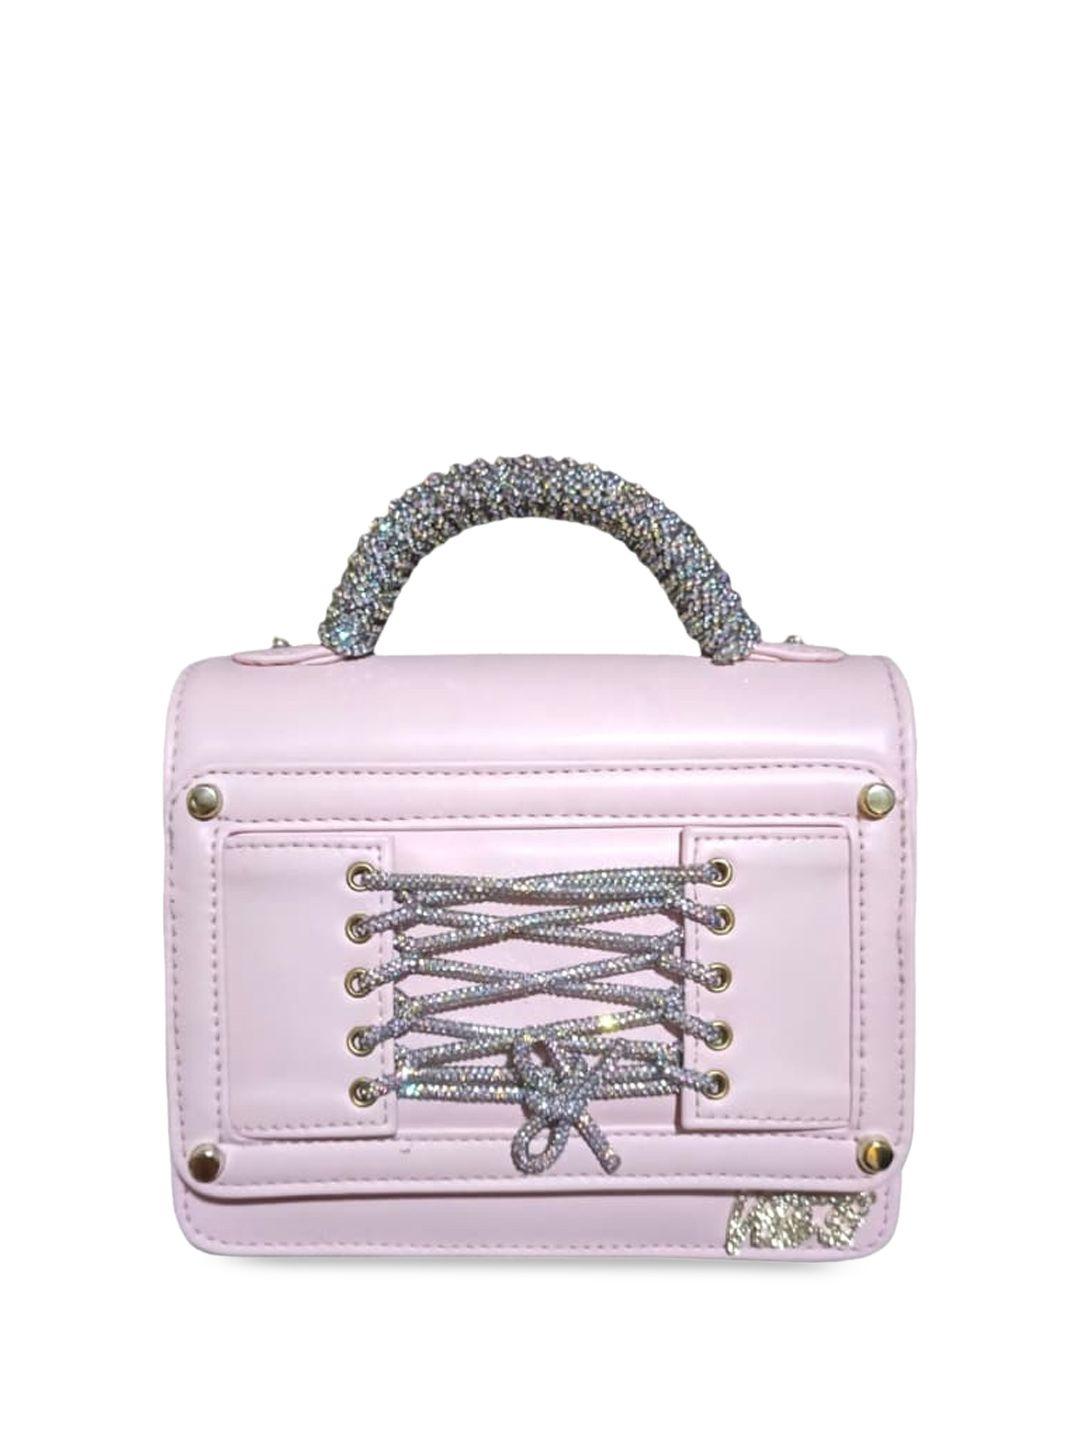 vdesi pink animal pu structured satchel